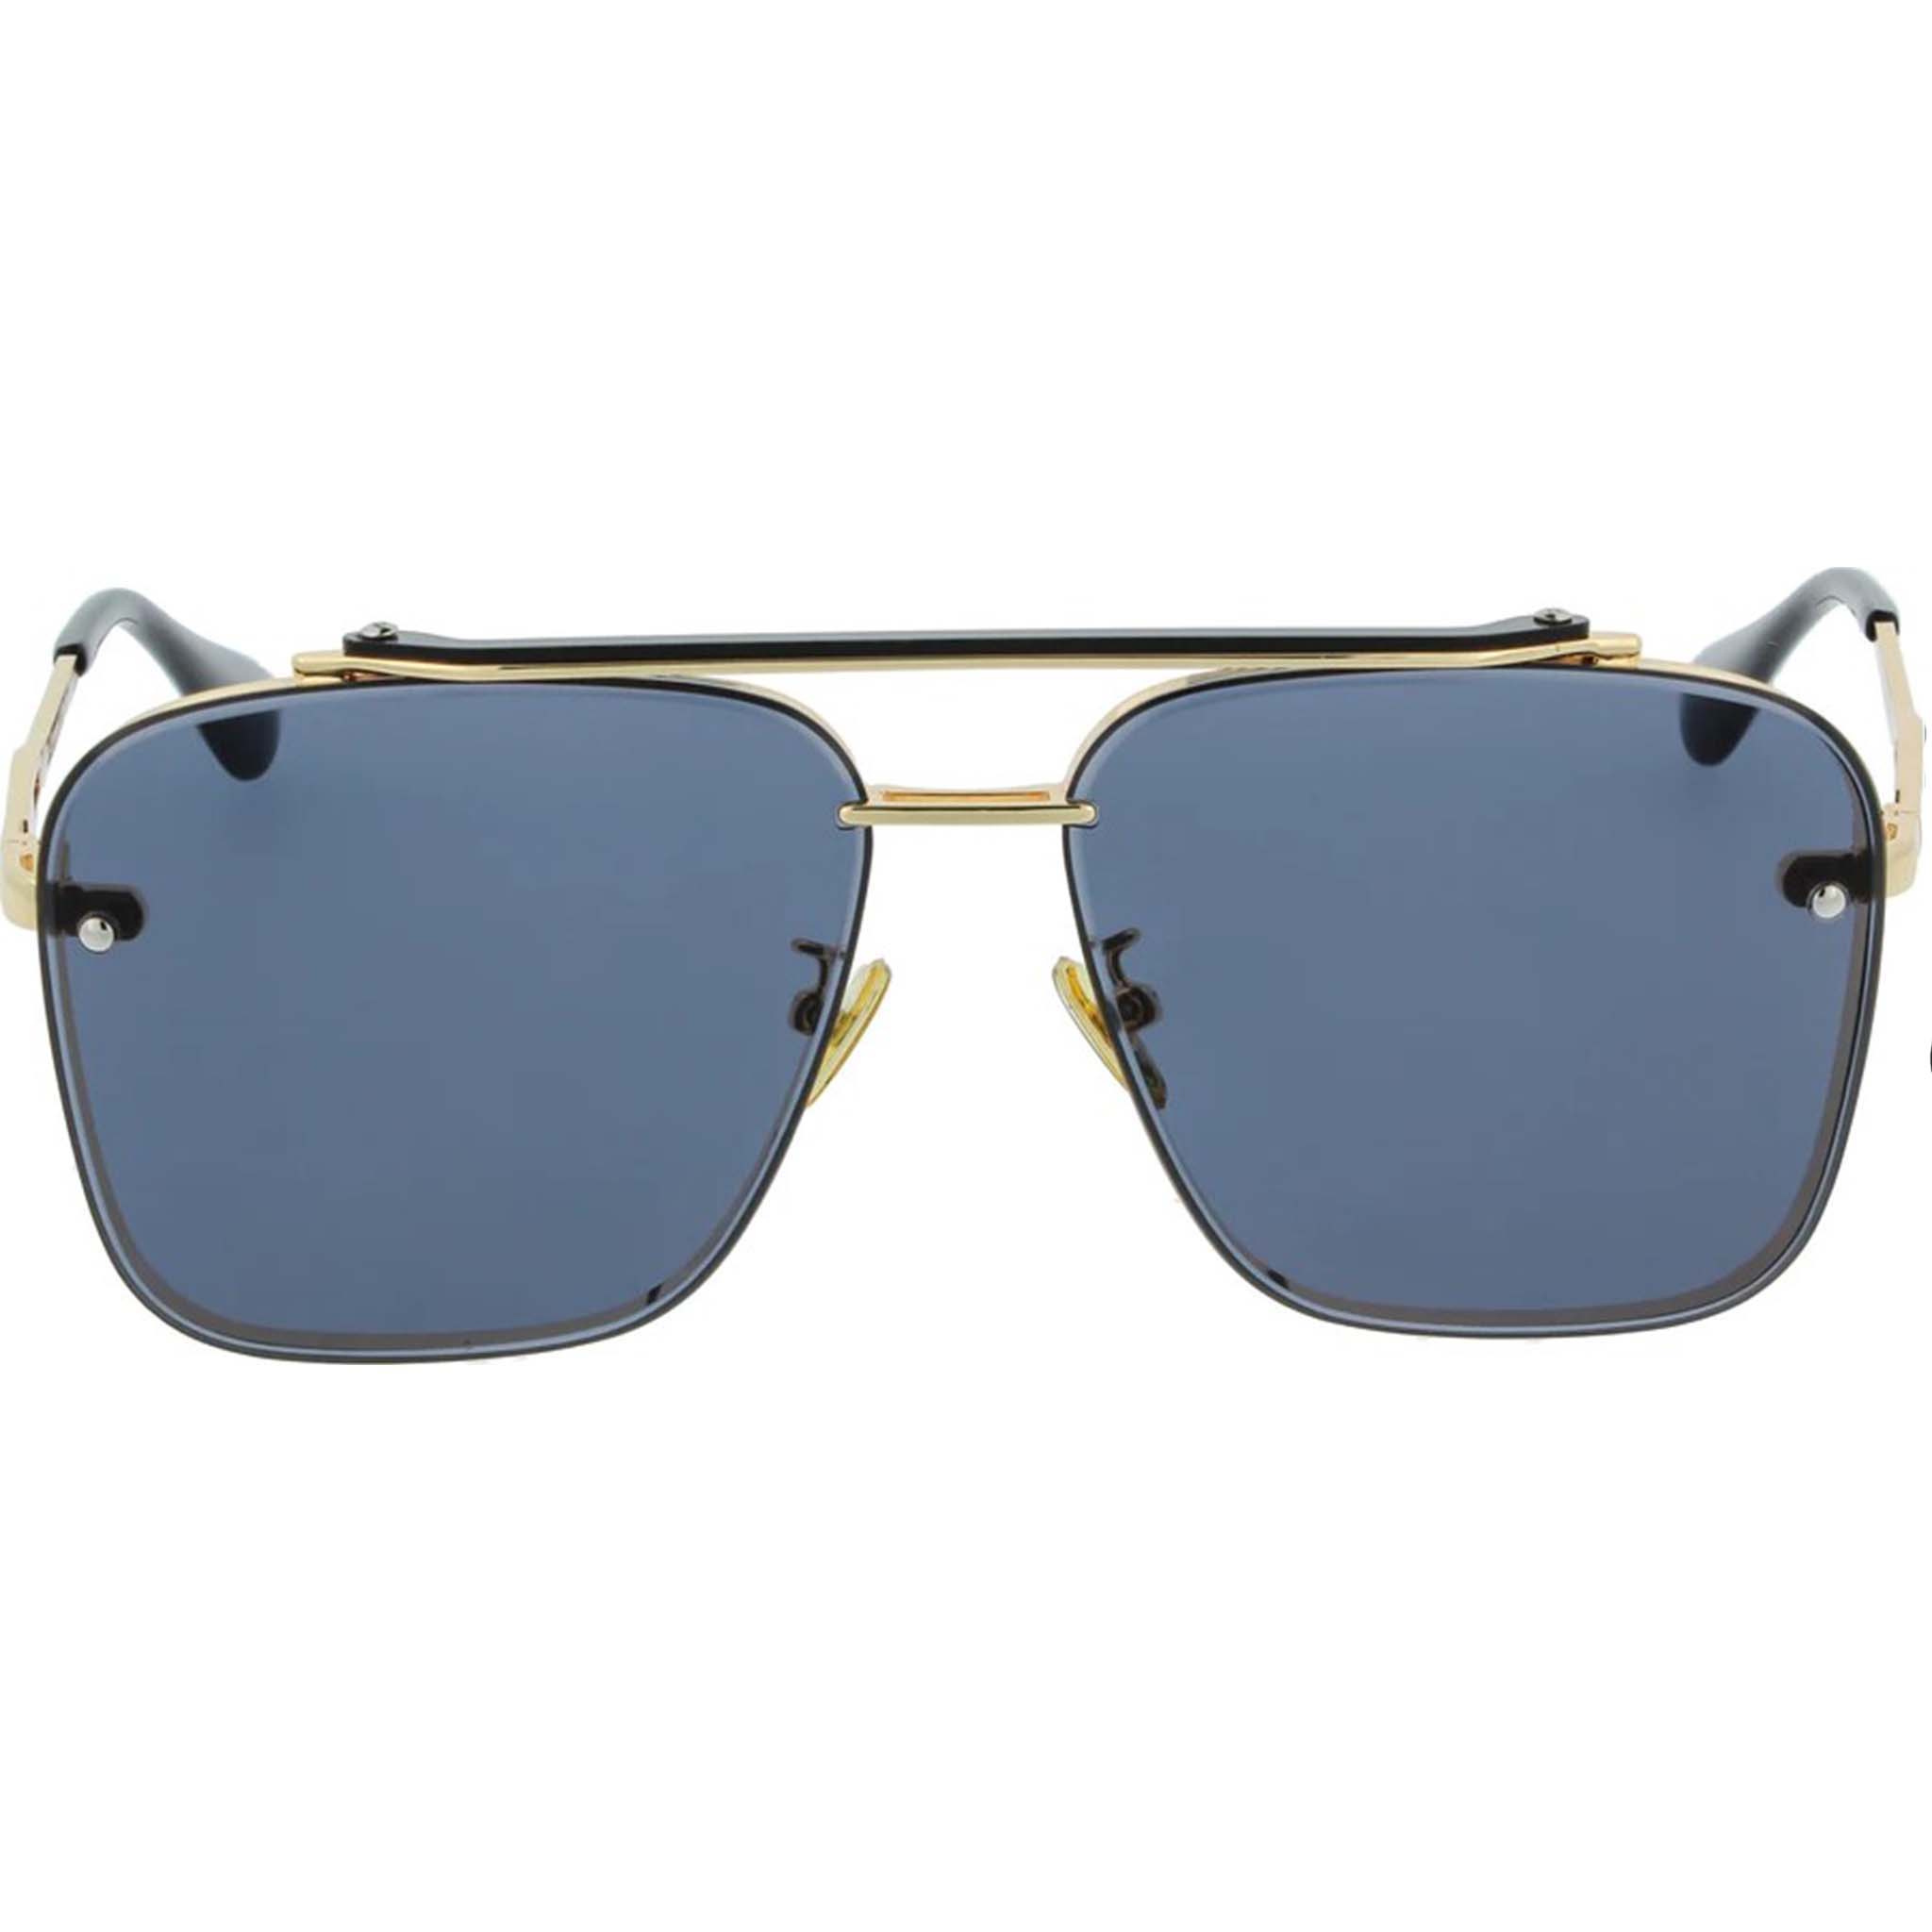 Ego Fashion Sunglasses DKFL1138